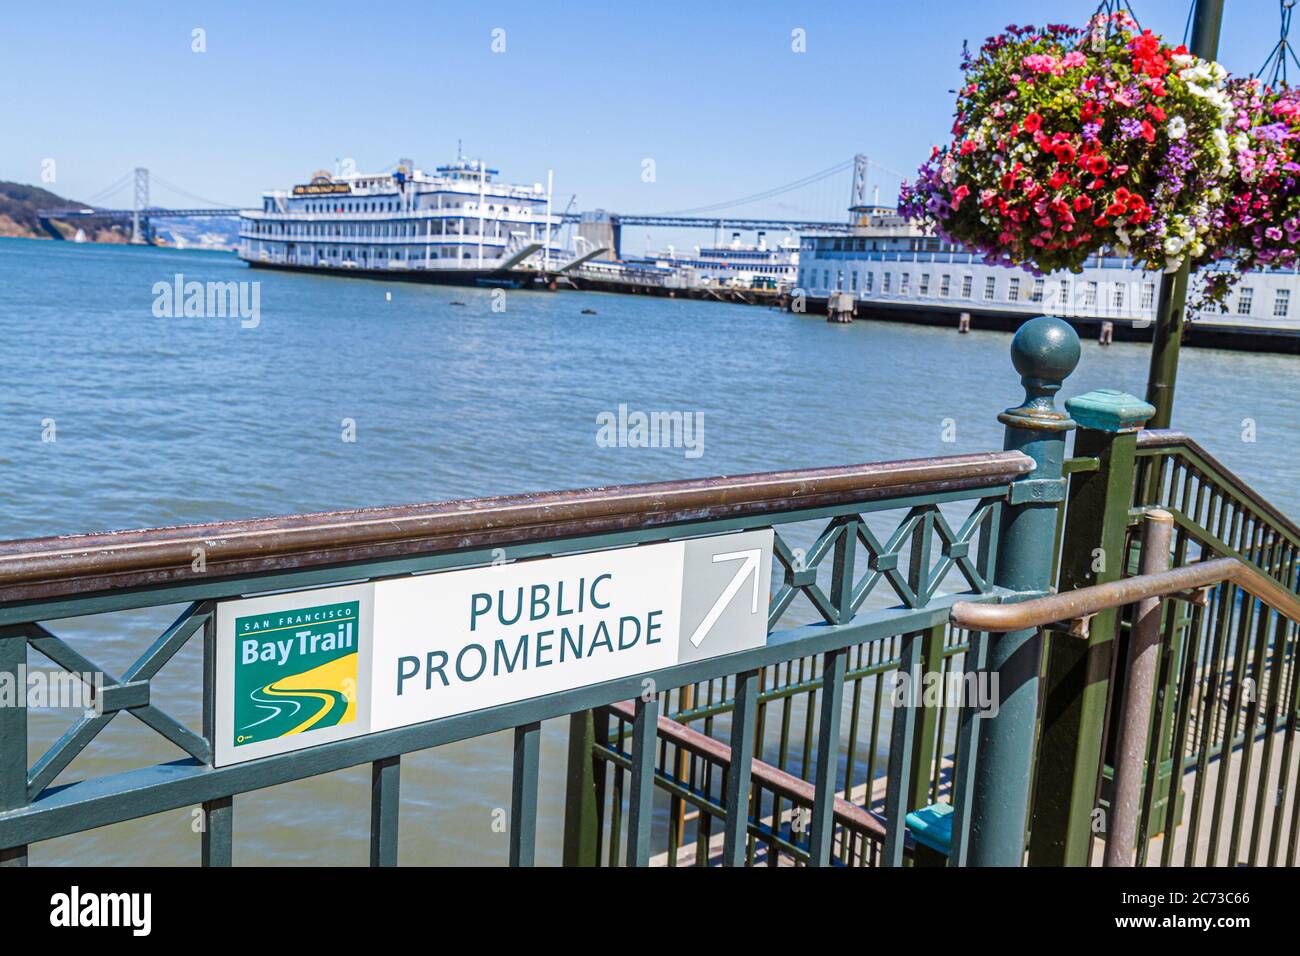 San Francisco California, The Embarcadero, San Francisco Bay, Pier 43 Bay Trail, öffentliche Promenade, Schild, Richtung, Erholungsgebiet am Wasser, Blumentopf, Stockfoto